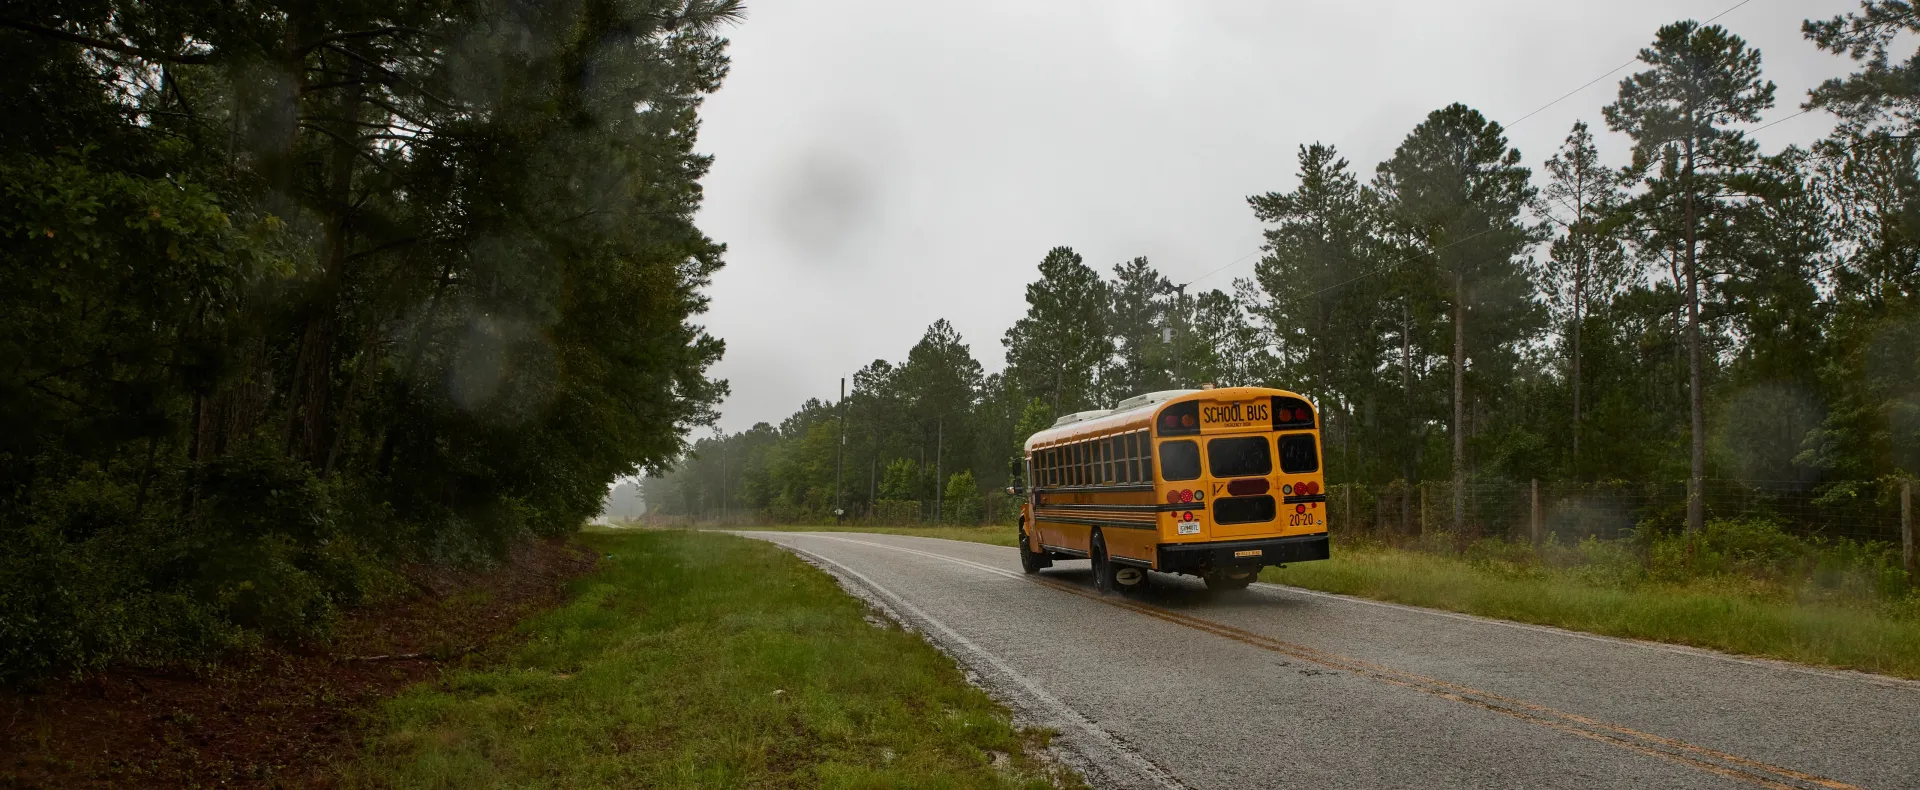 Hero image - school bus driving through rural area